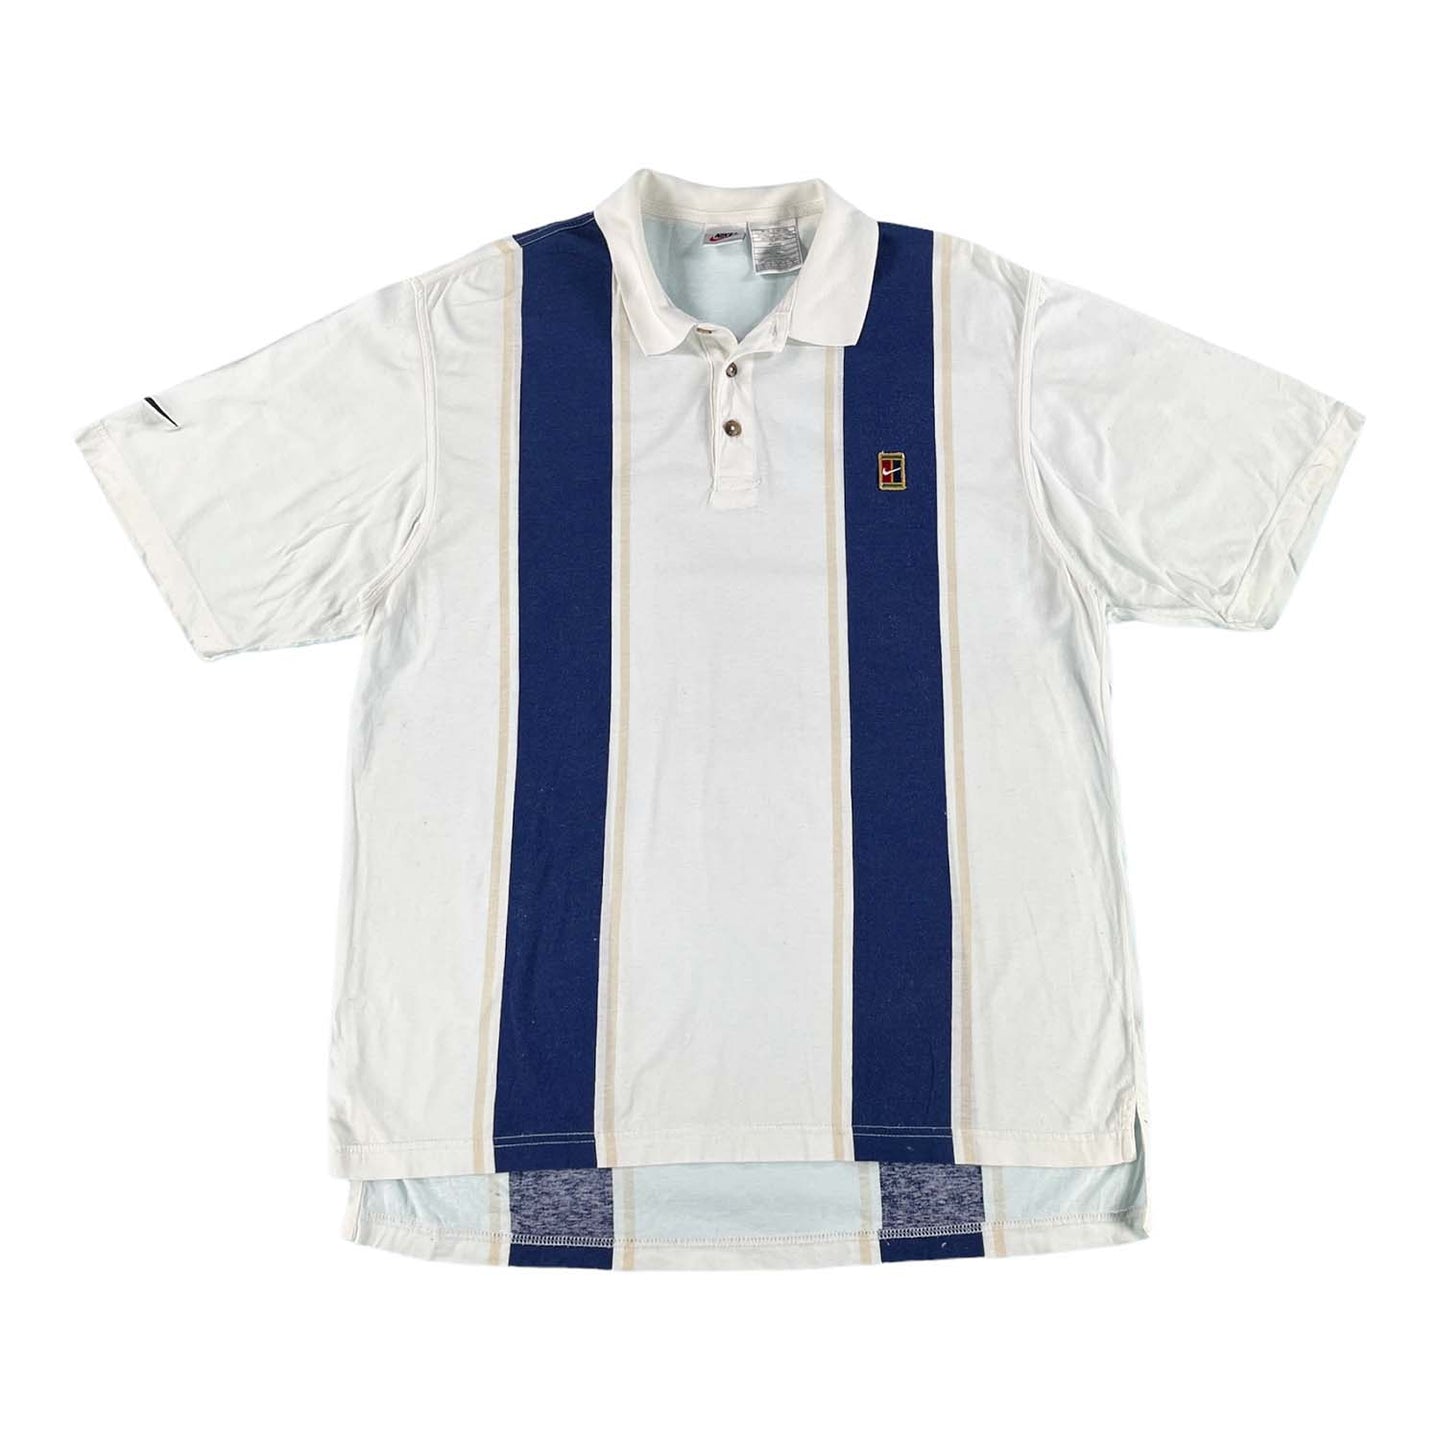 '90s Nike Challenge Court striped polo shirt L/XL